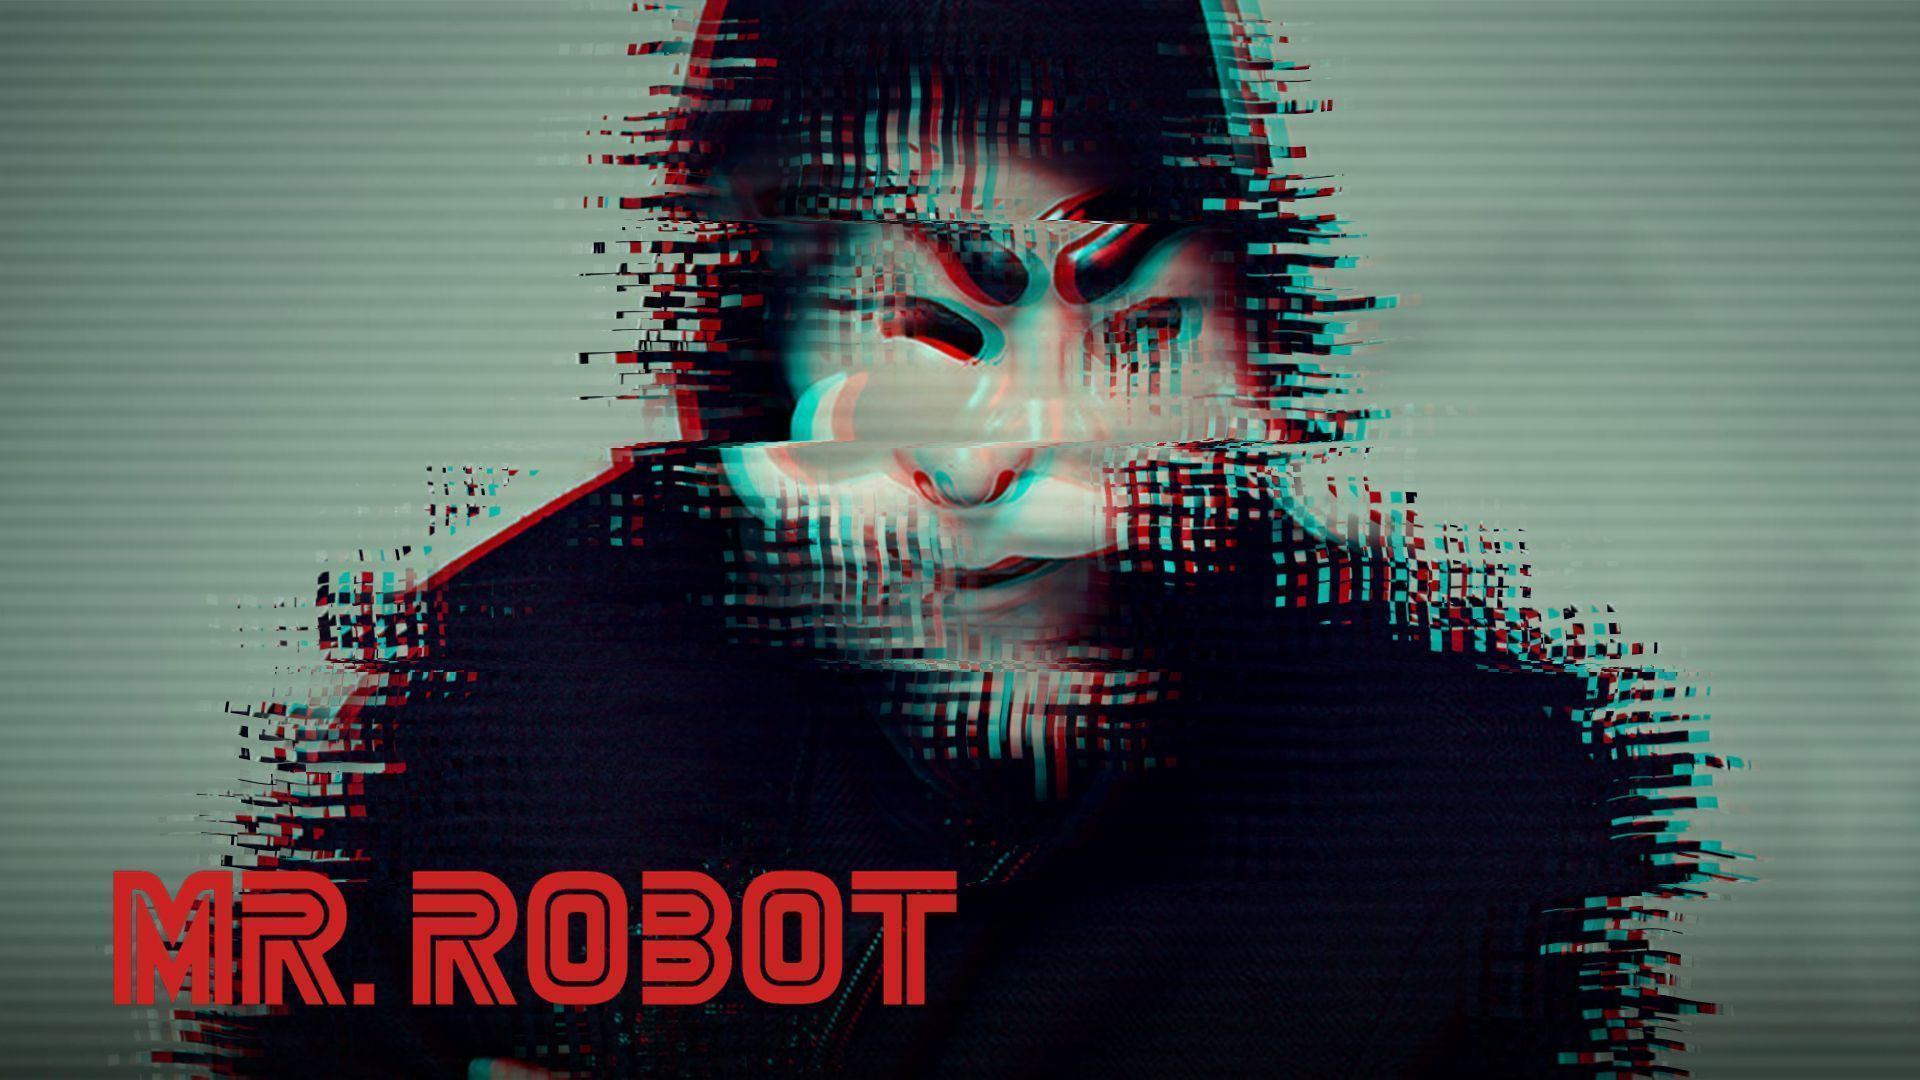 Some Mr. Robot Wallpaper I made